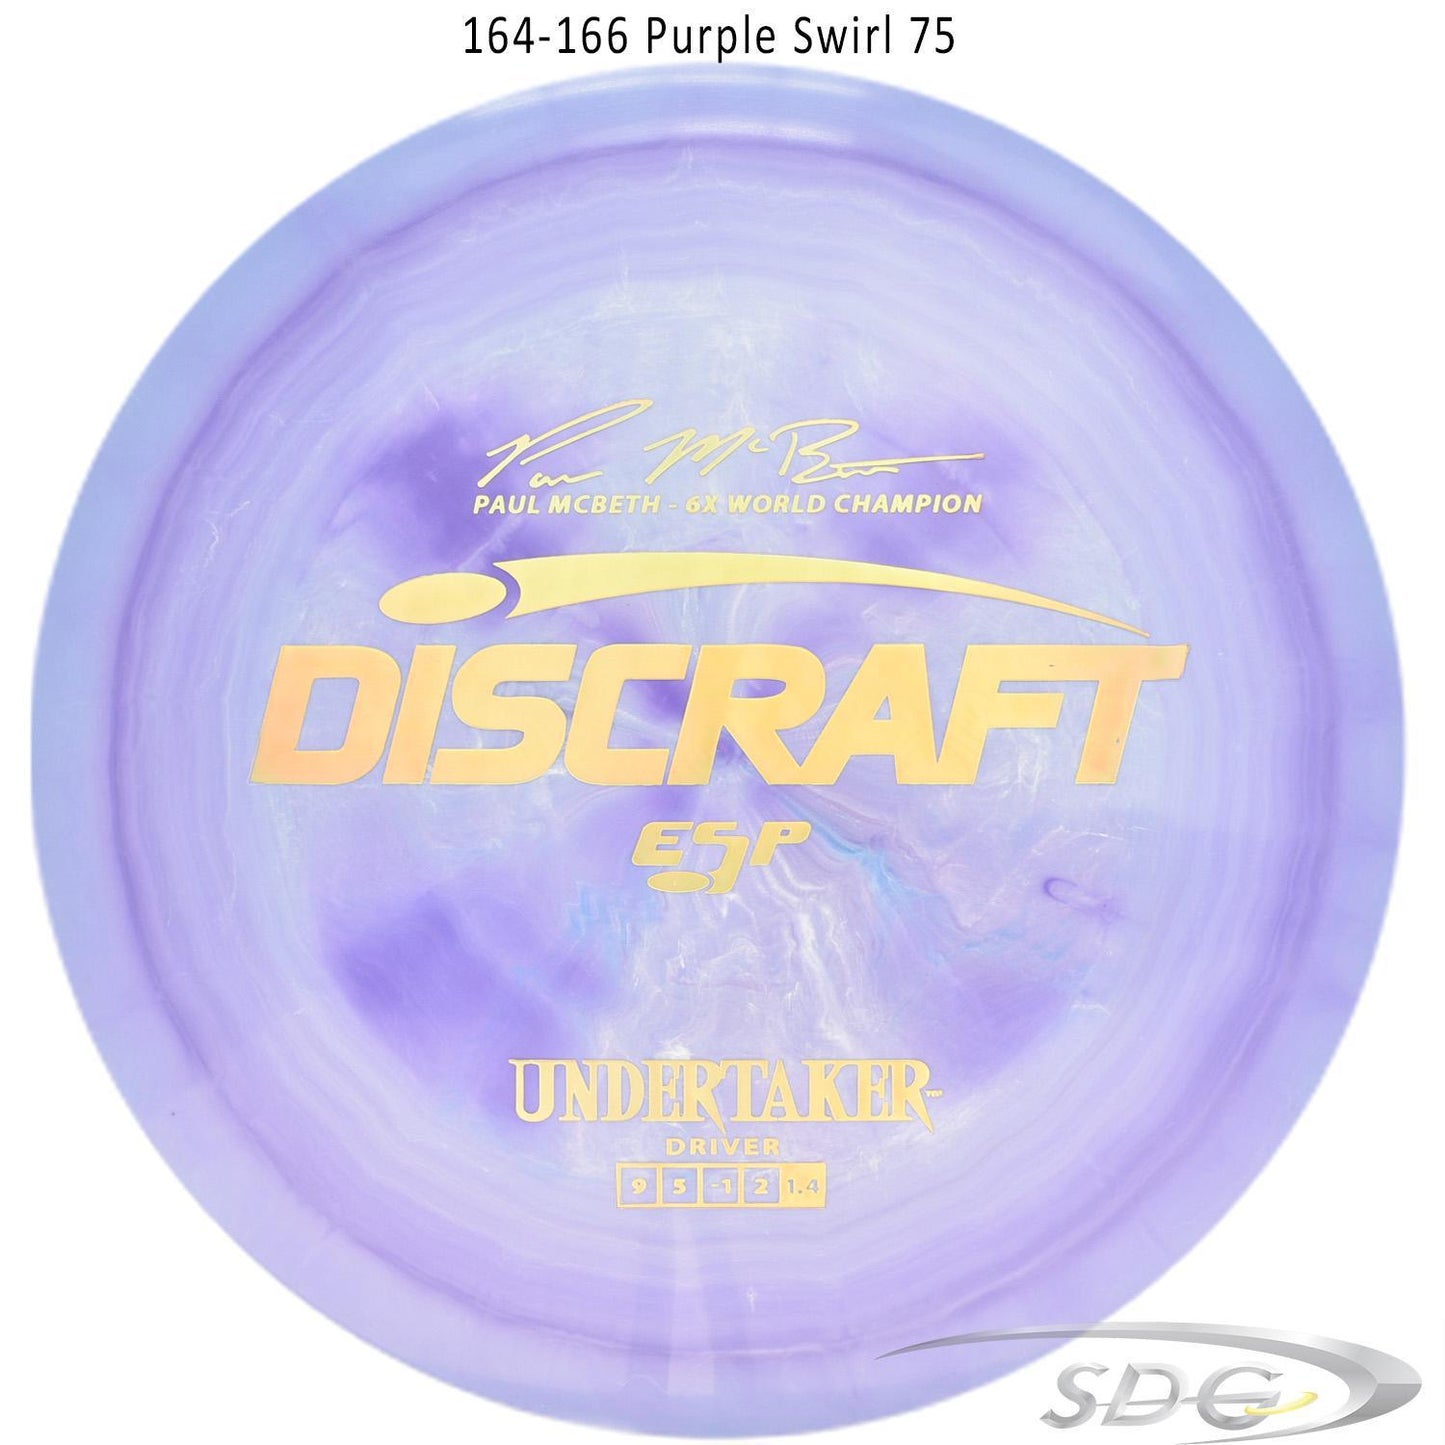 discraft-esp-undertaker-6x-paul-mcbeth-signature-series-disc-golf-distance-driver-169-160-weights 164-166 Purple Swirl 75 